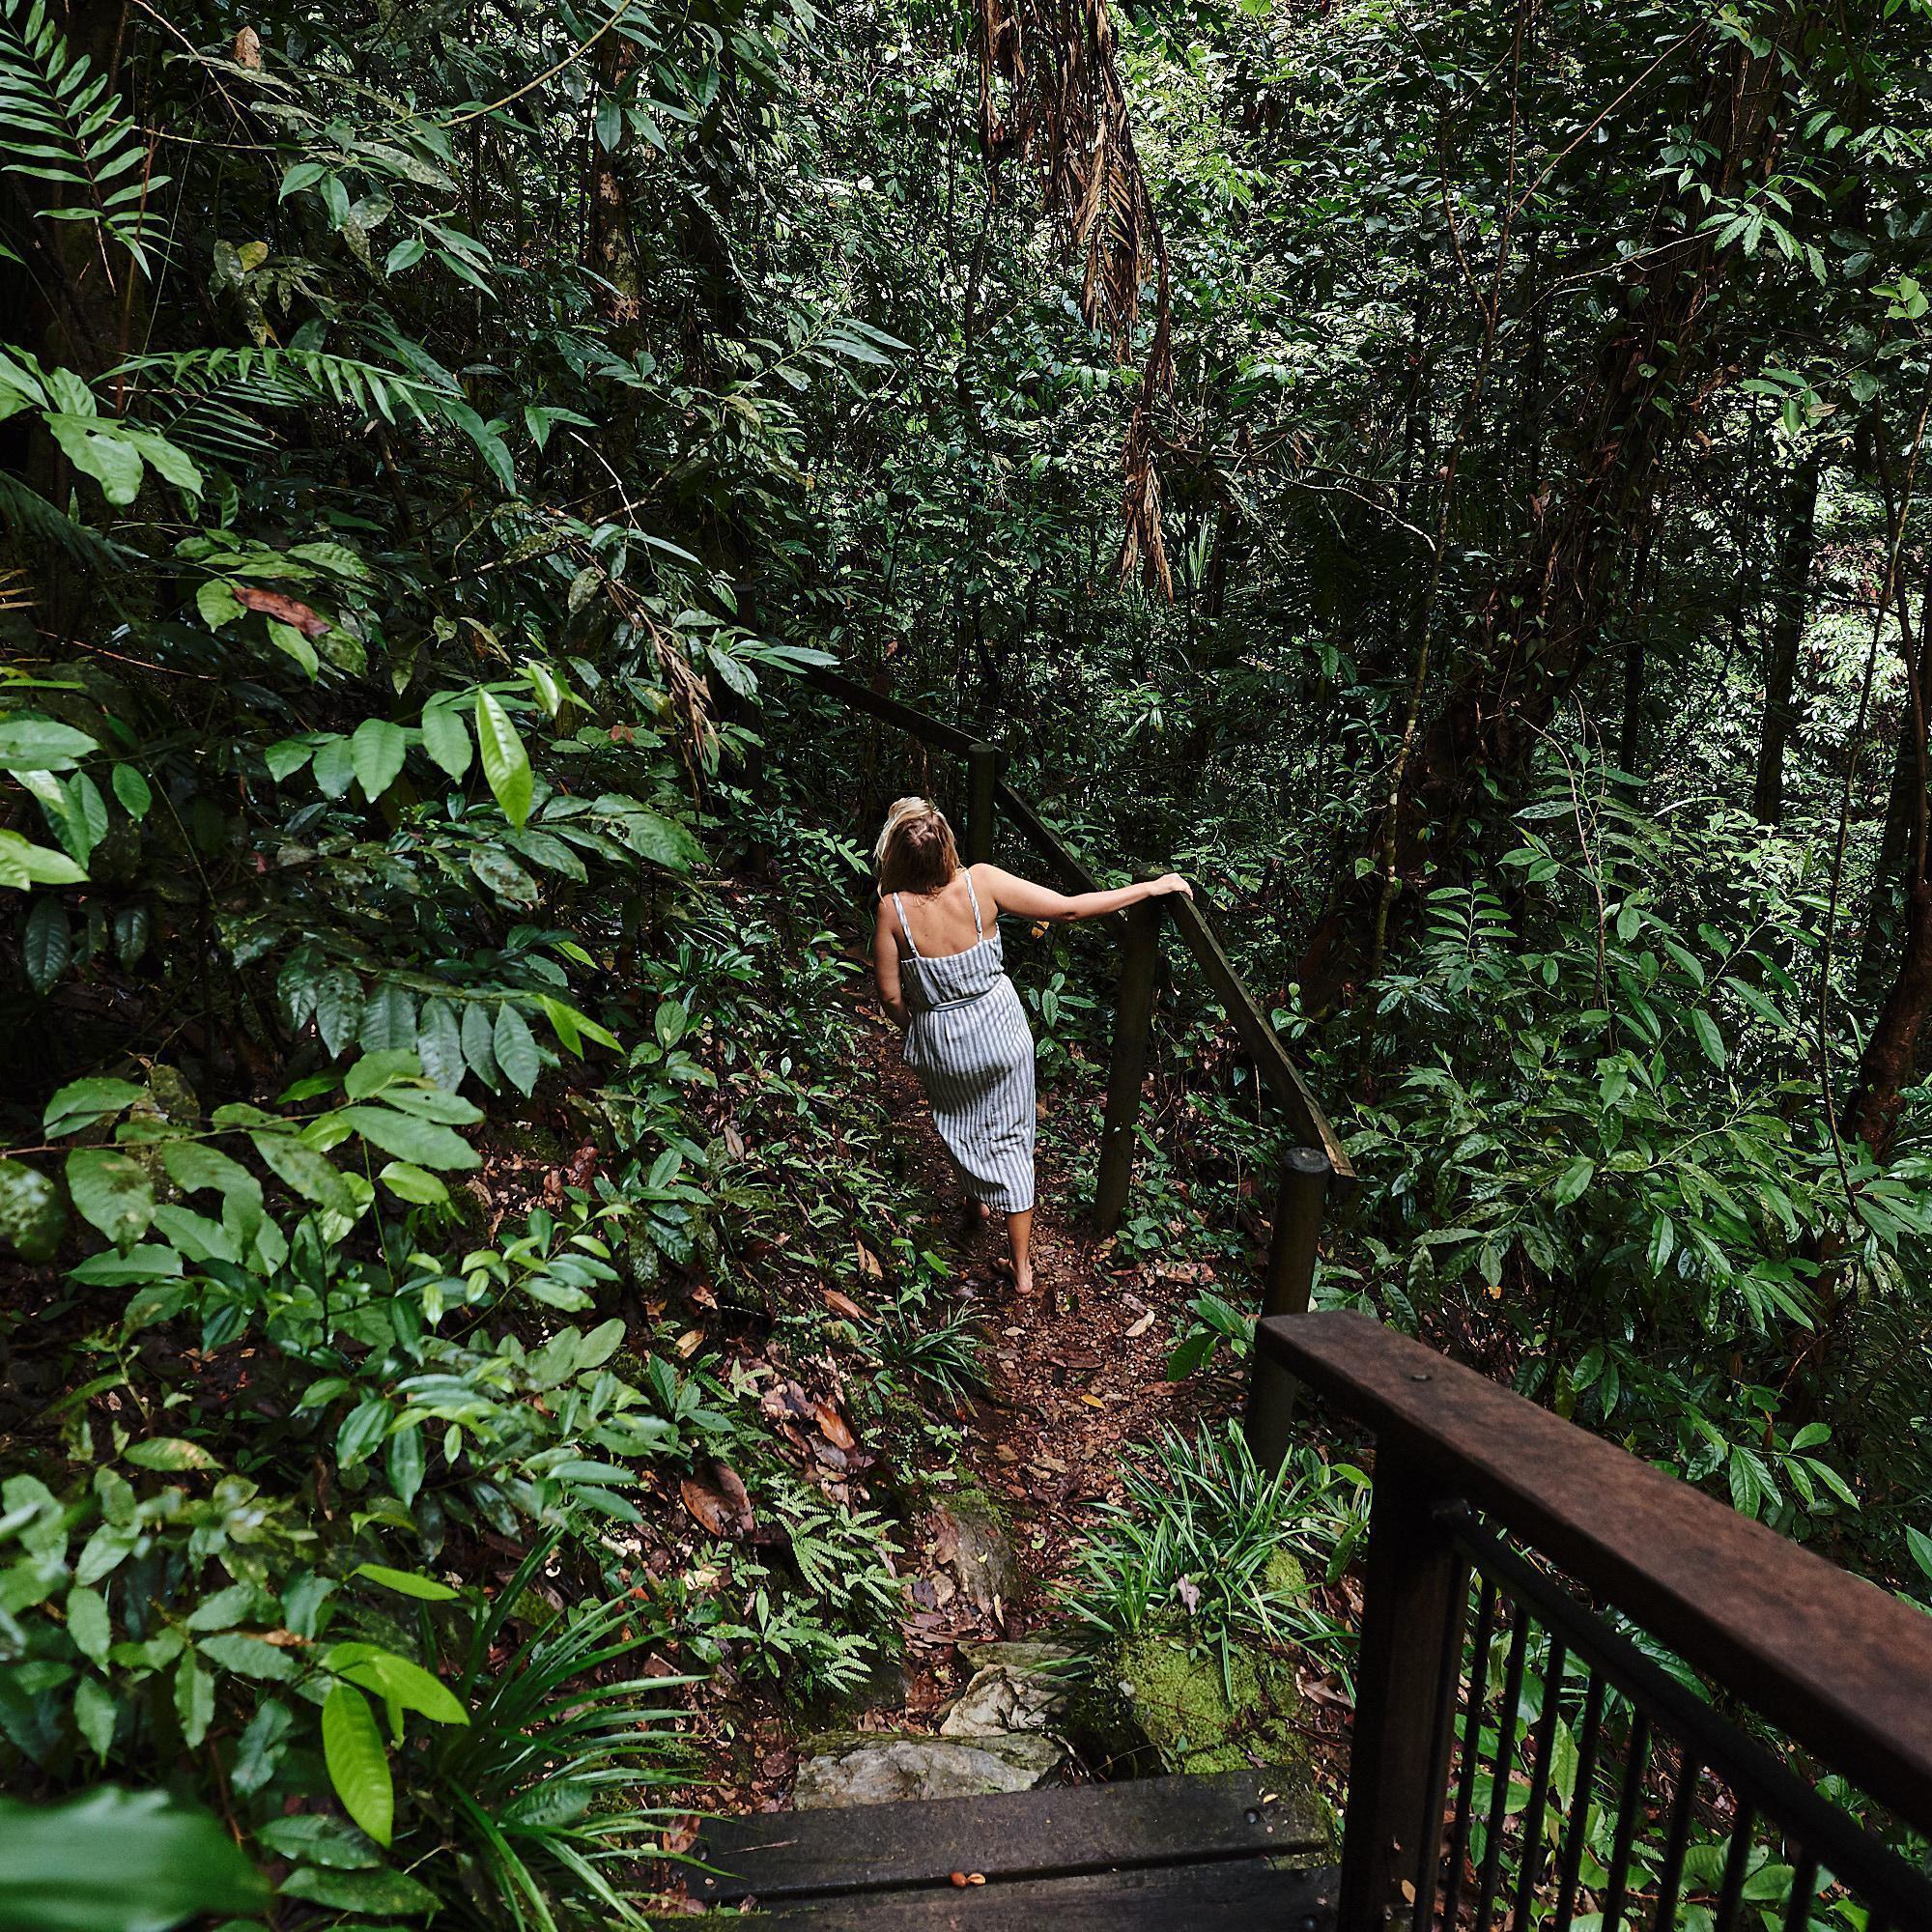 daintree rainforest luxury accommodation bushwalks